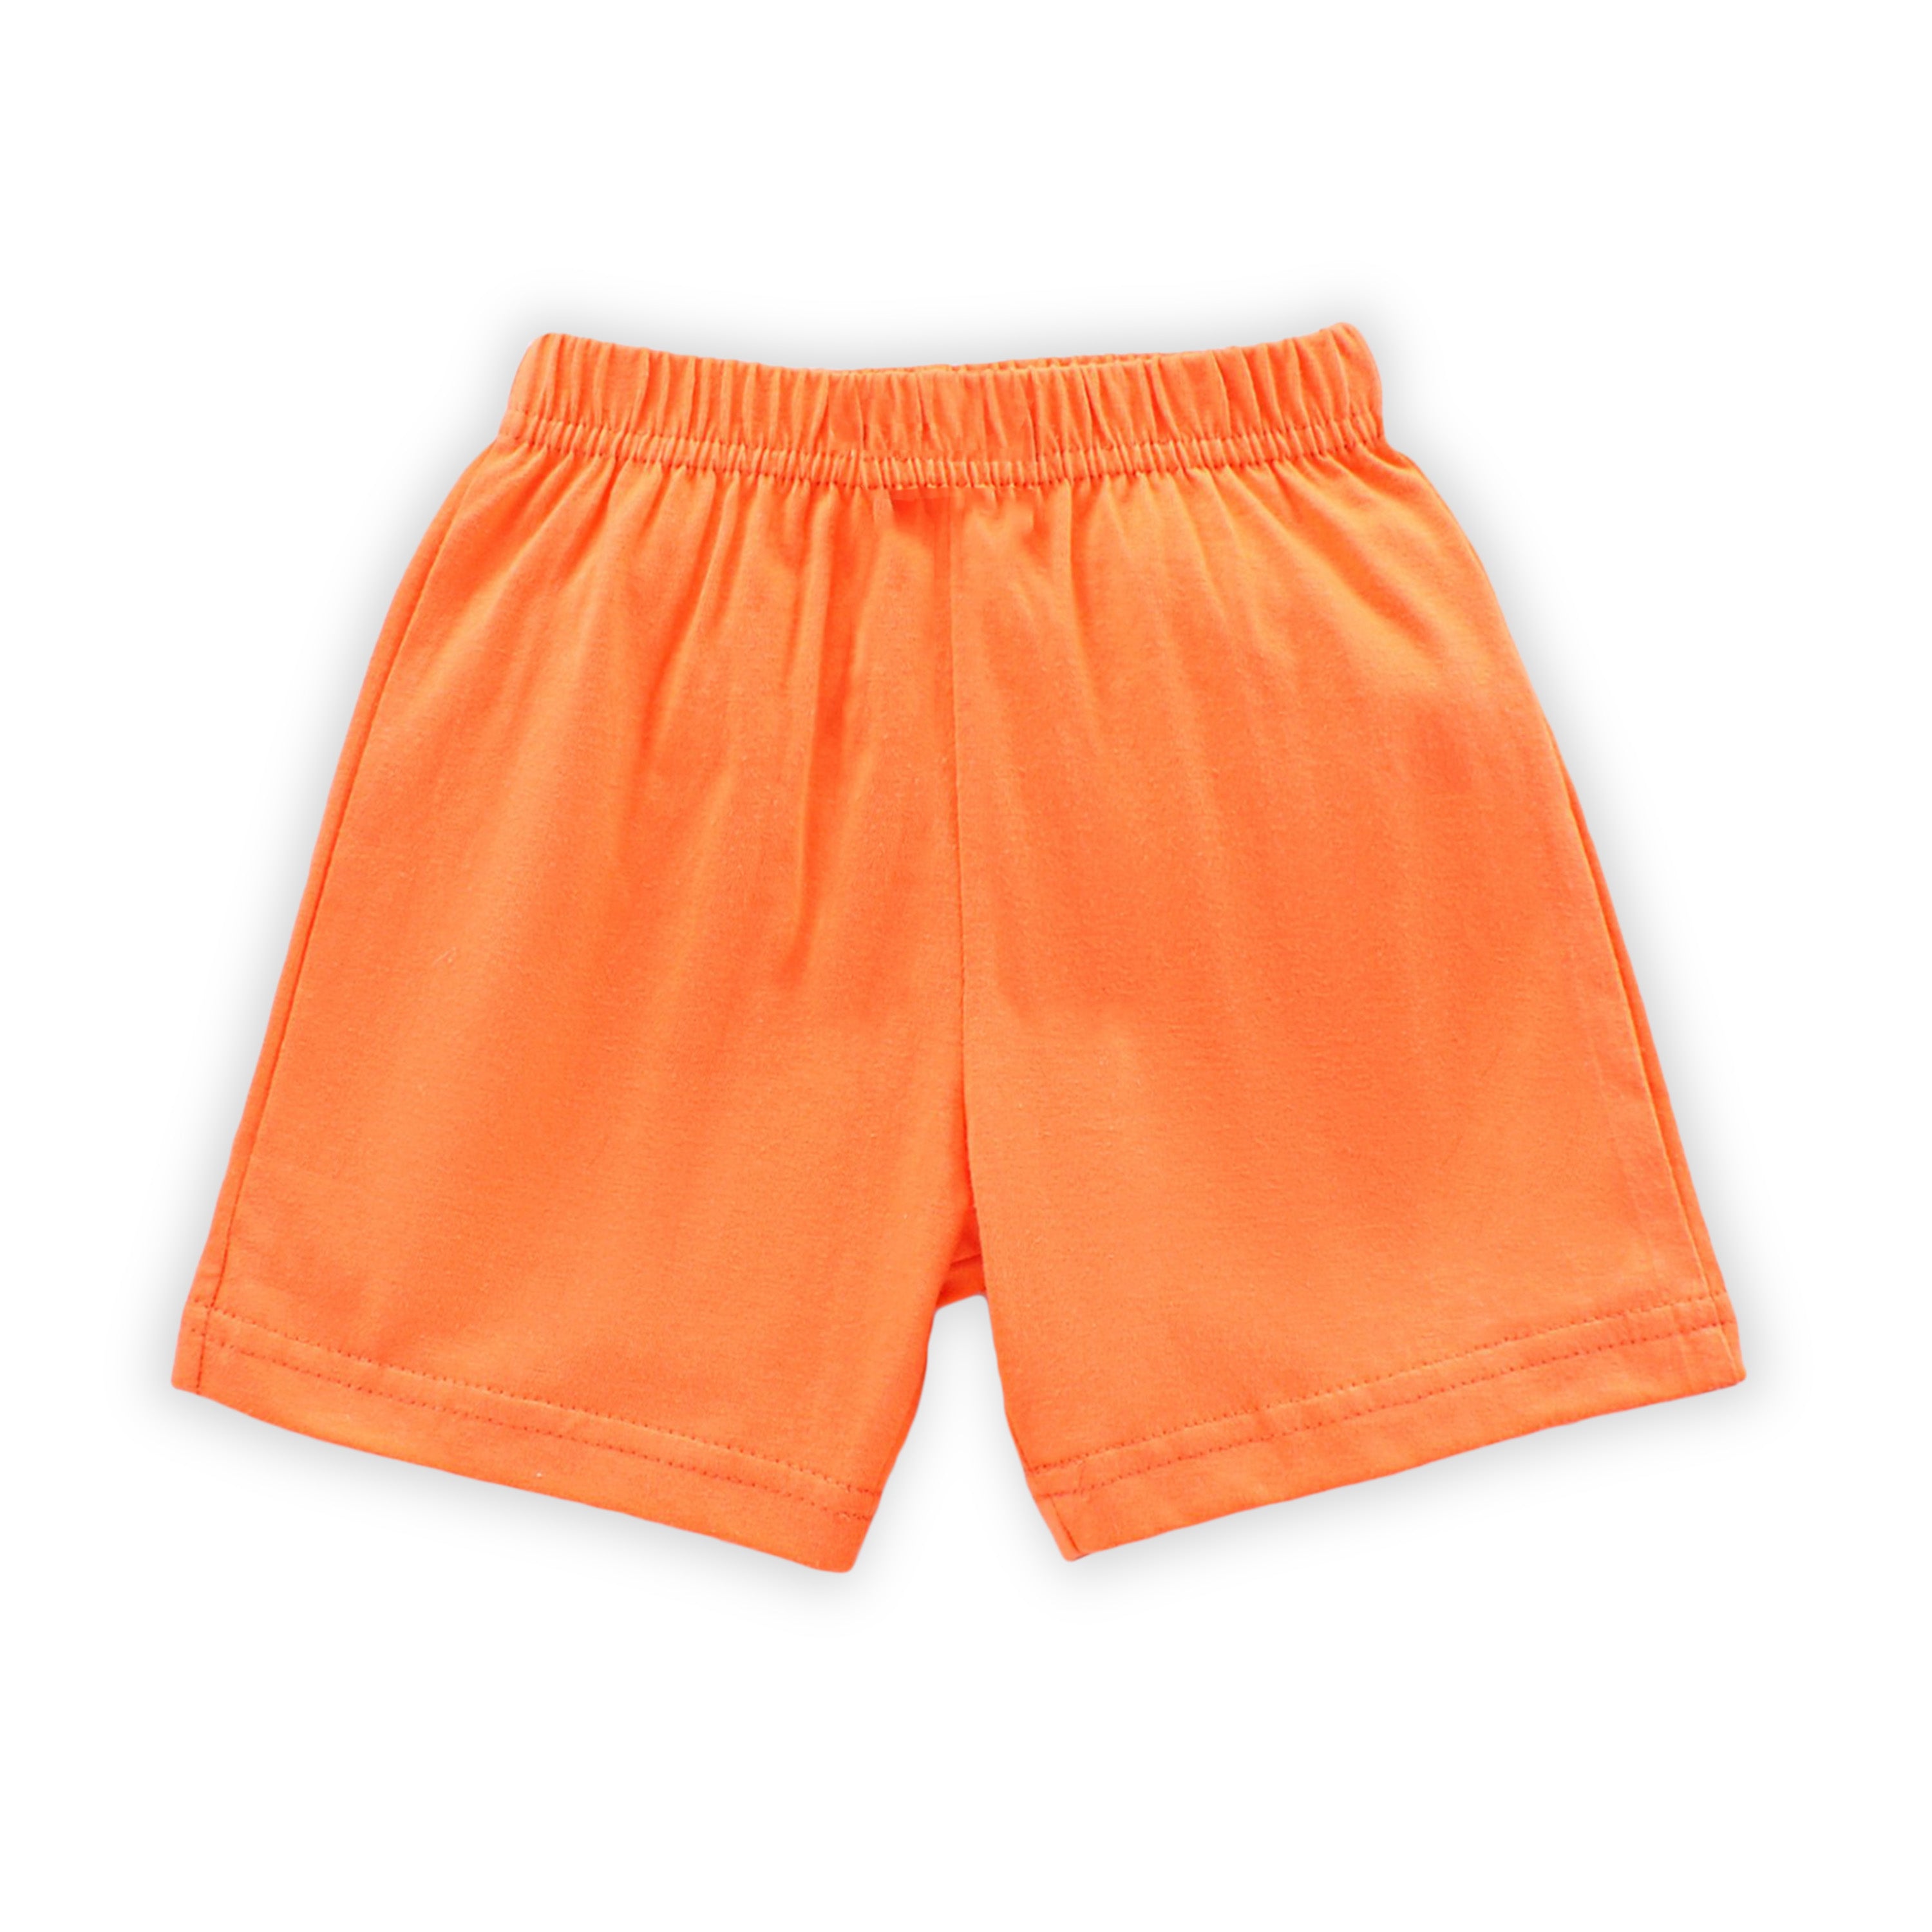 Kids Orange Solid Cotton Shorts